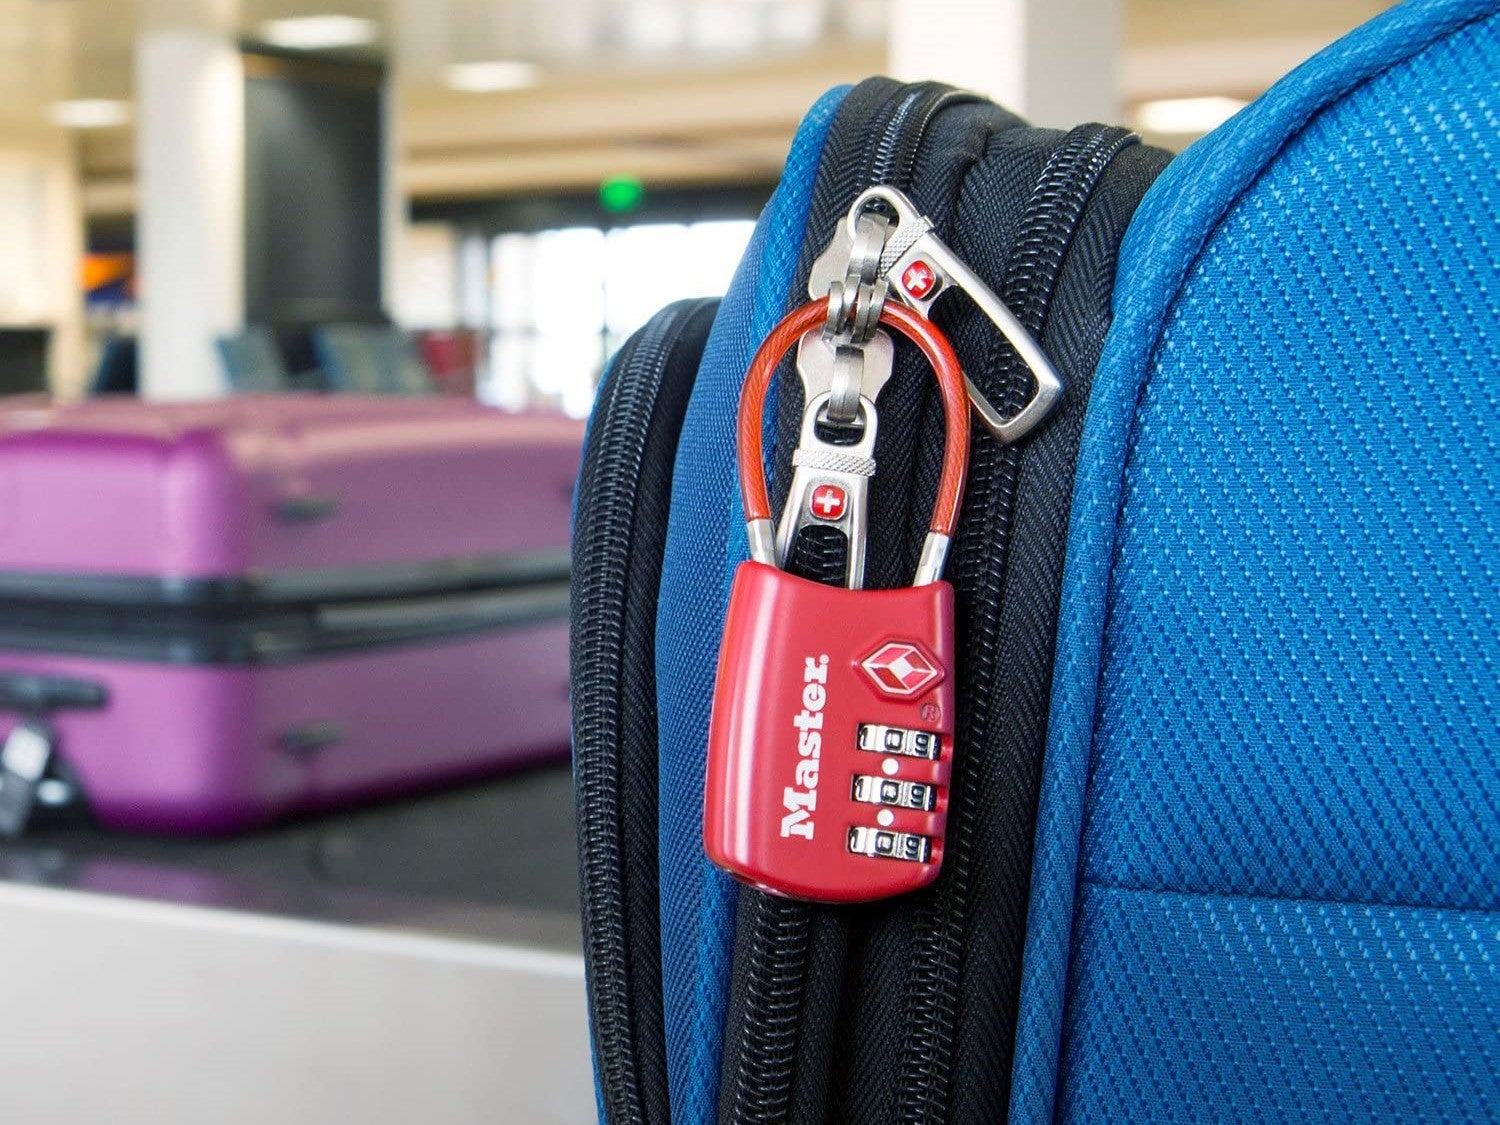 Perfect Travel Locks for Suitcase & Backpack Padlock Combination Lock 5 Black Digit Luggage Locks 